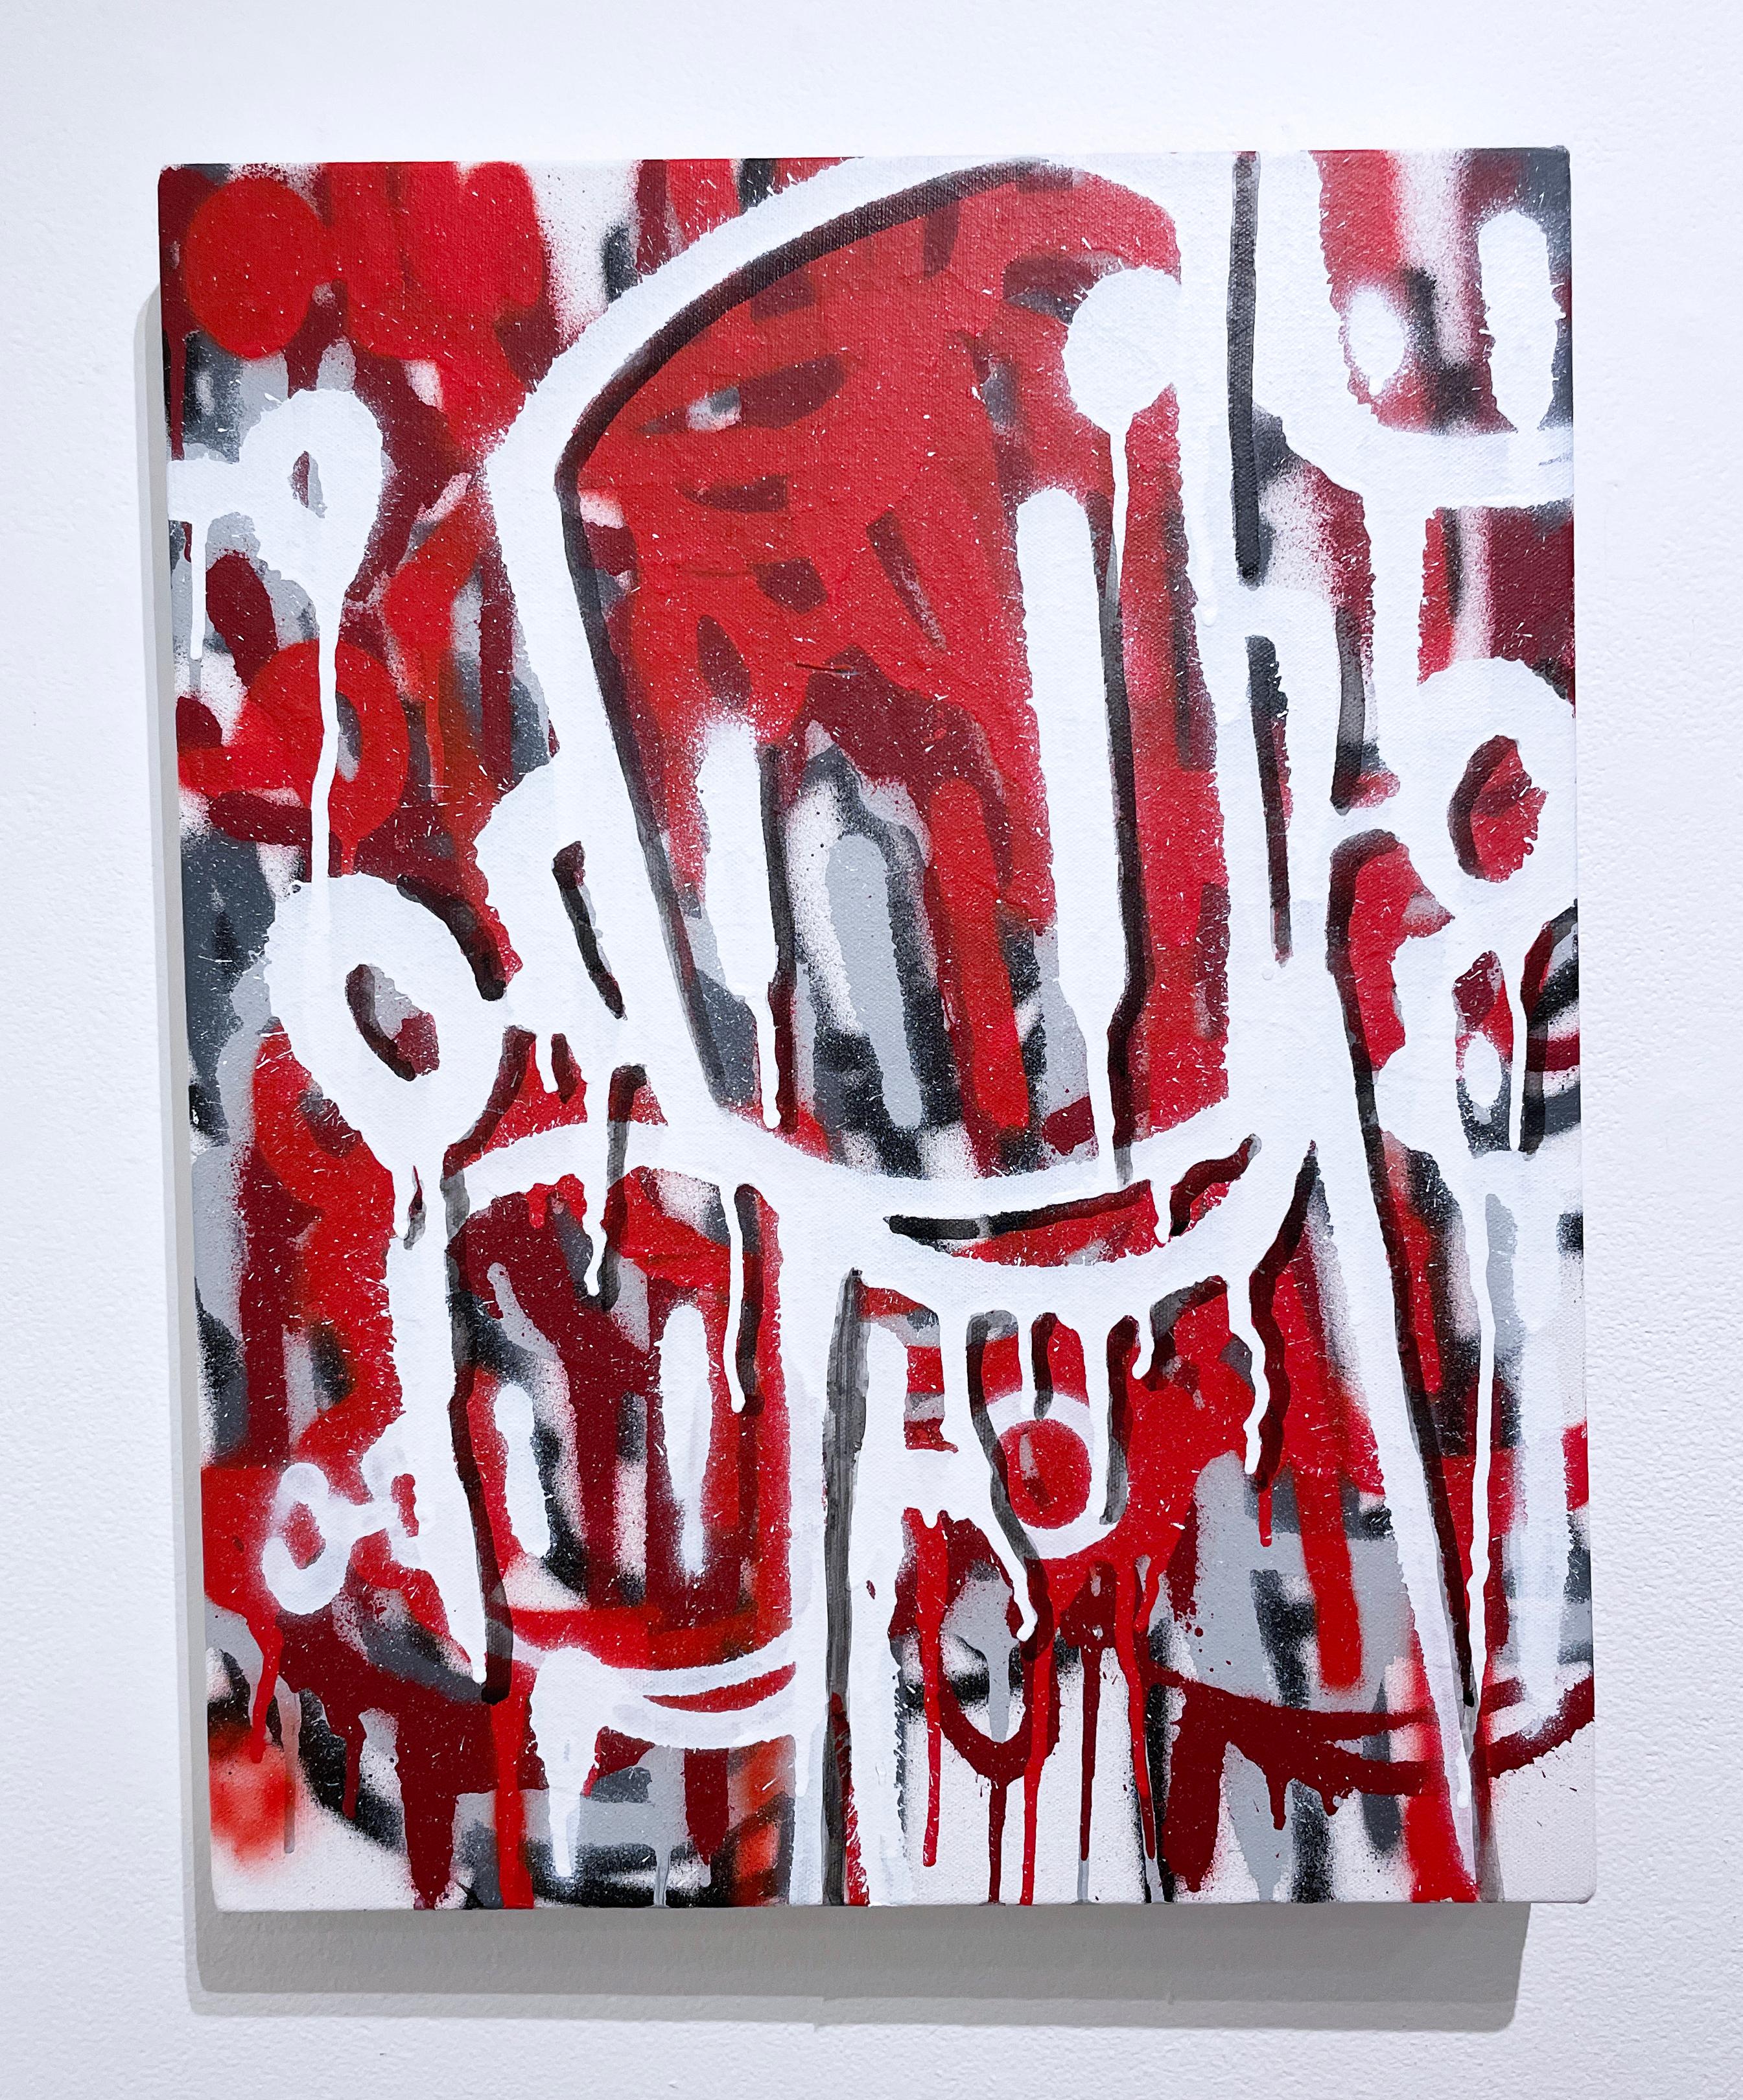 Memories or Ghosts by Chris RWK, street art, graffiti, spray paint, red & white